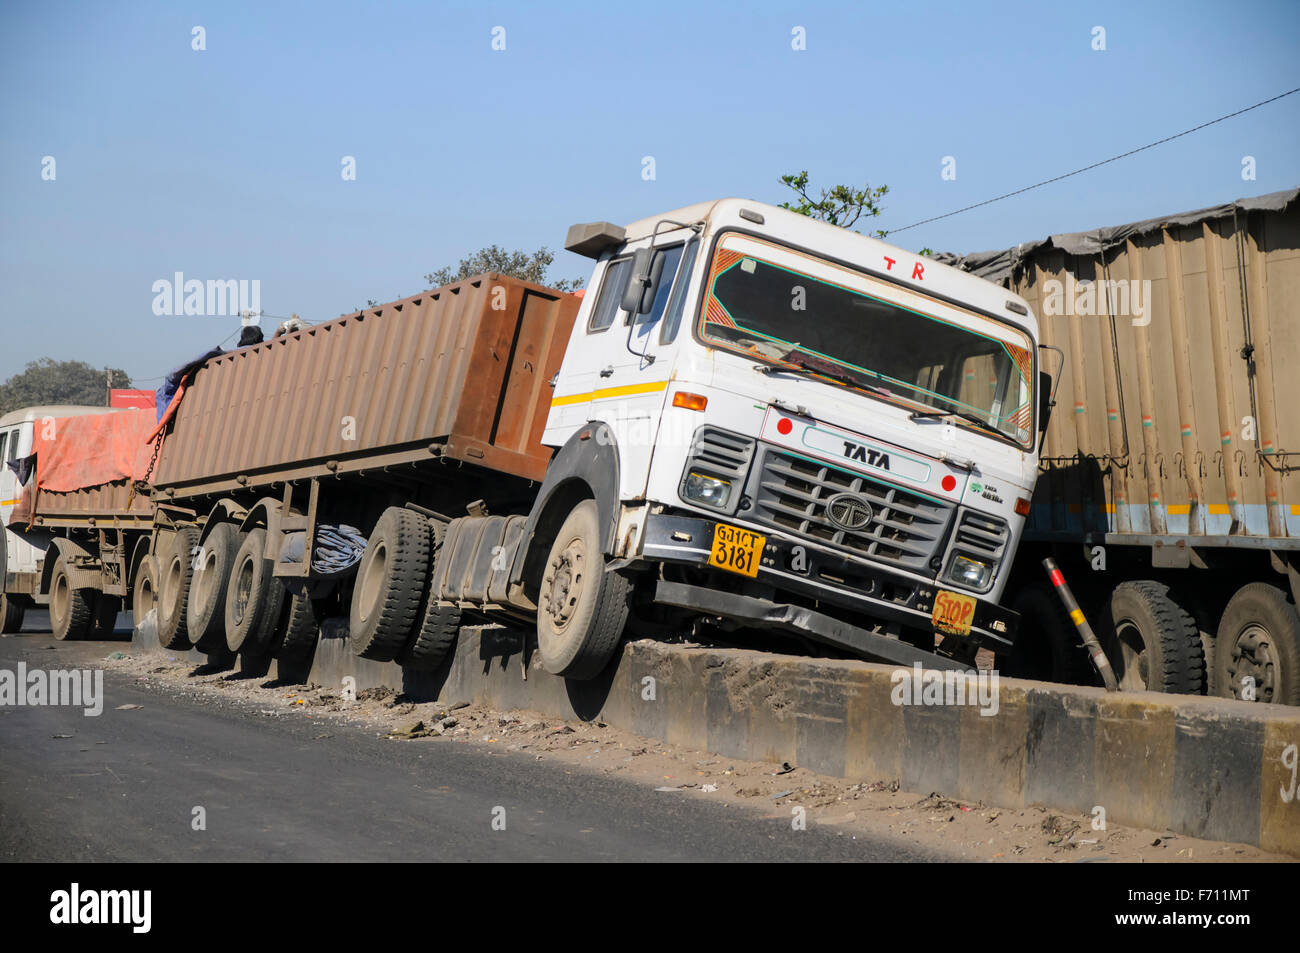 TATA Truck accident, bardoli, gujrat, india, asia Stock Photo